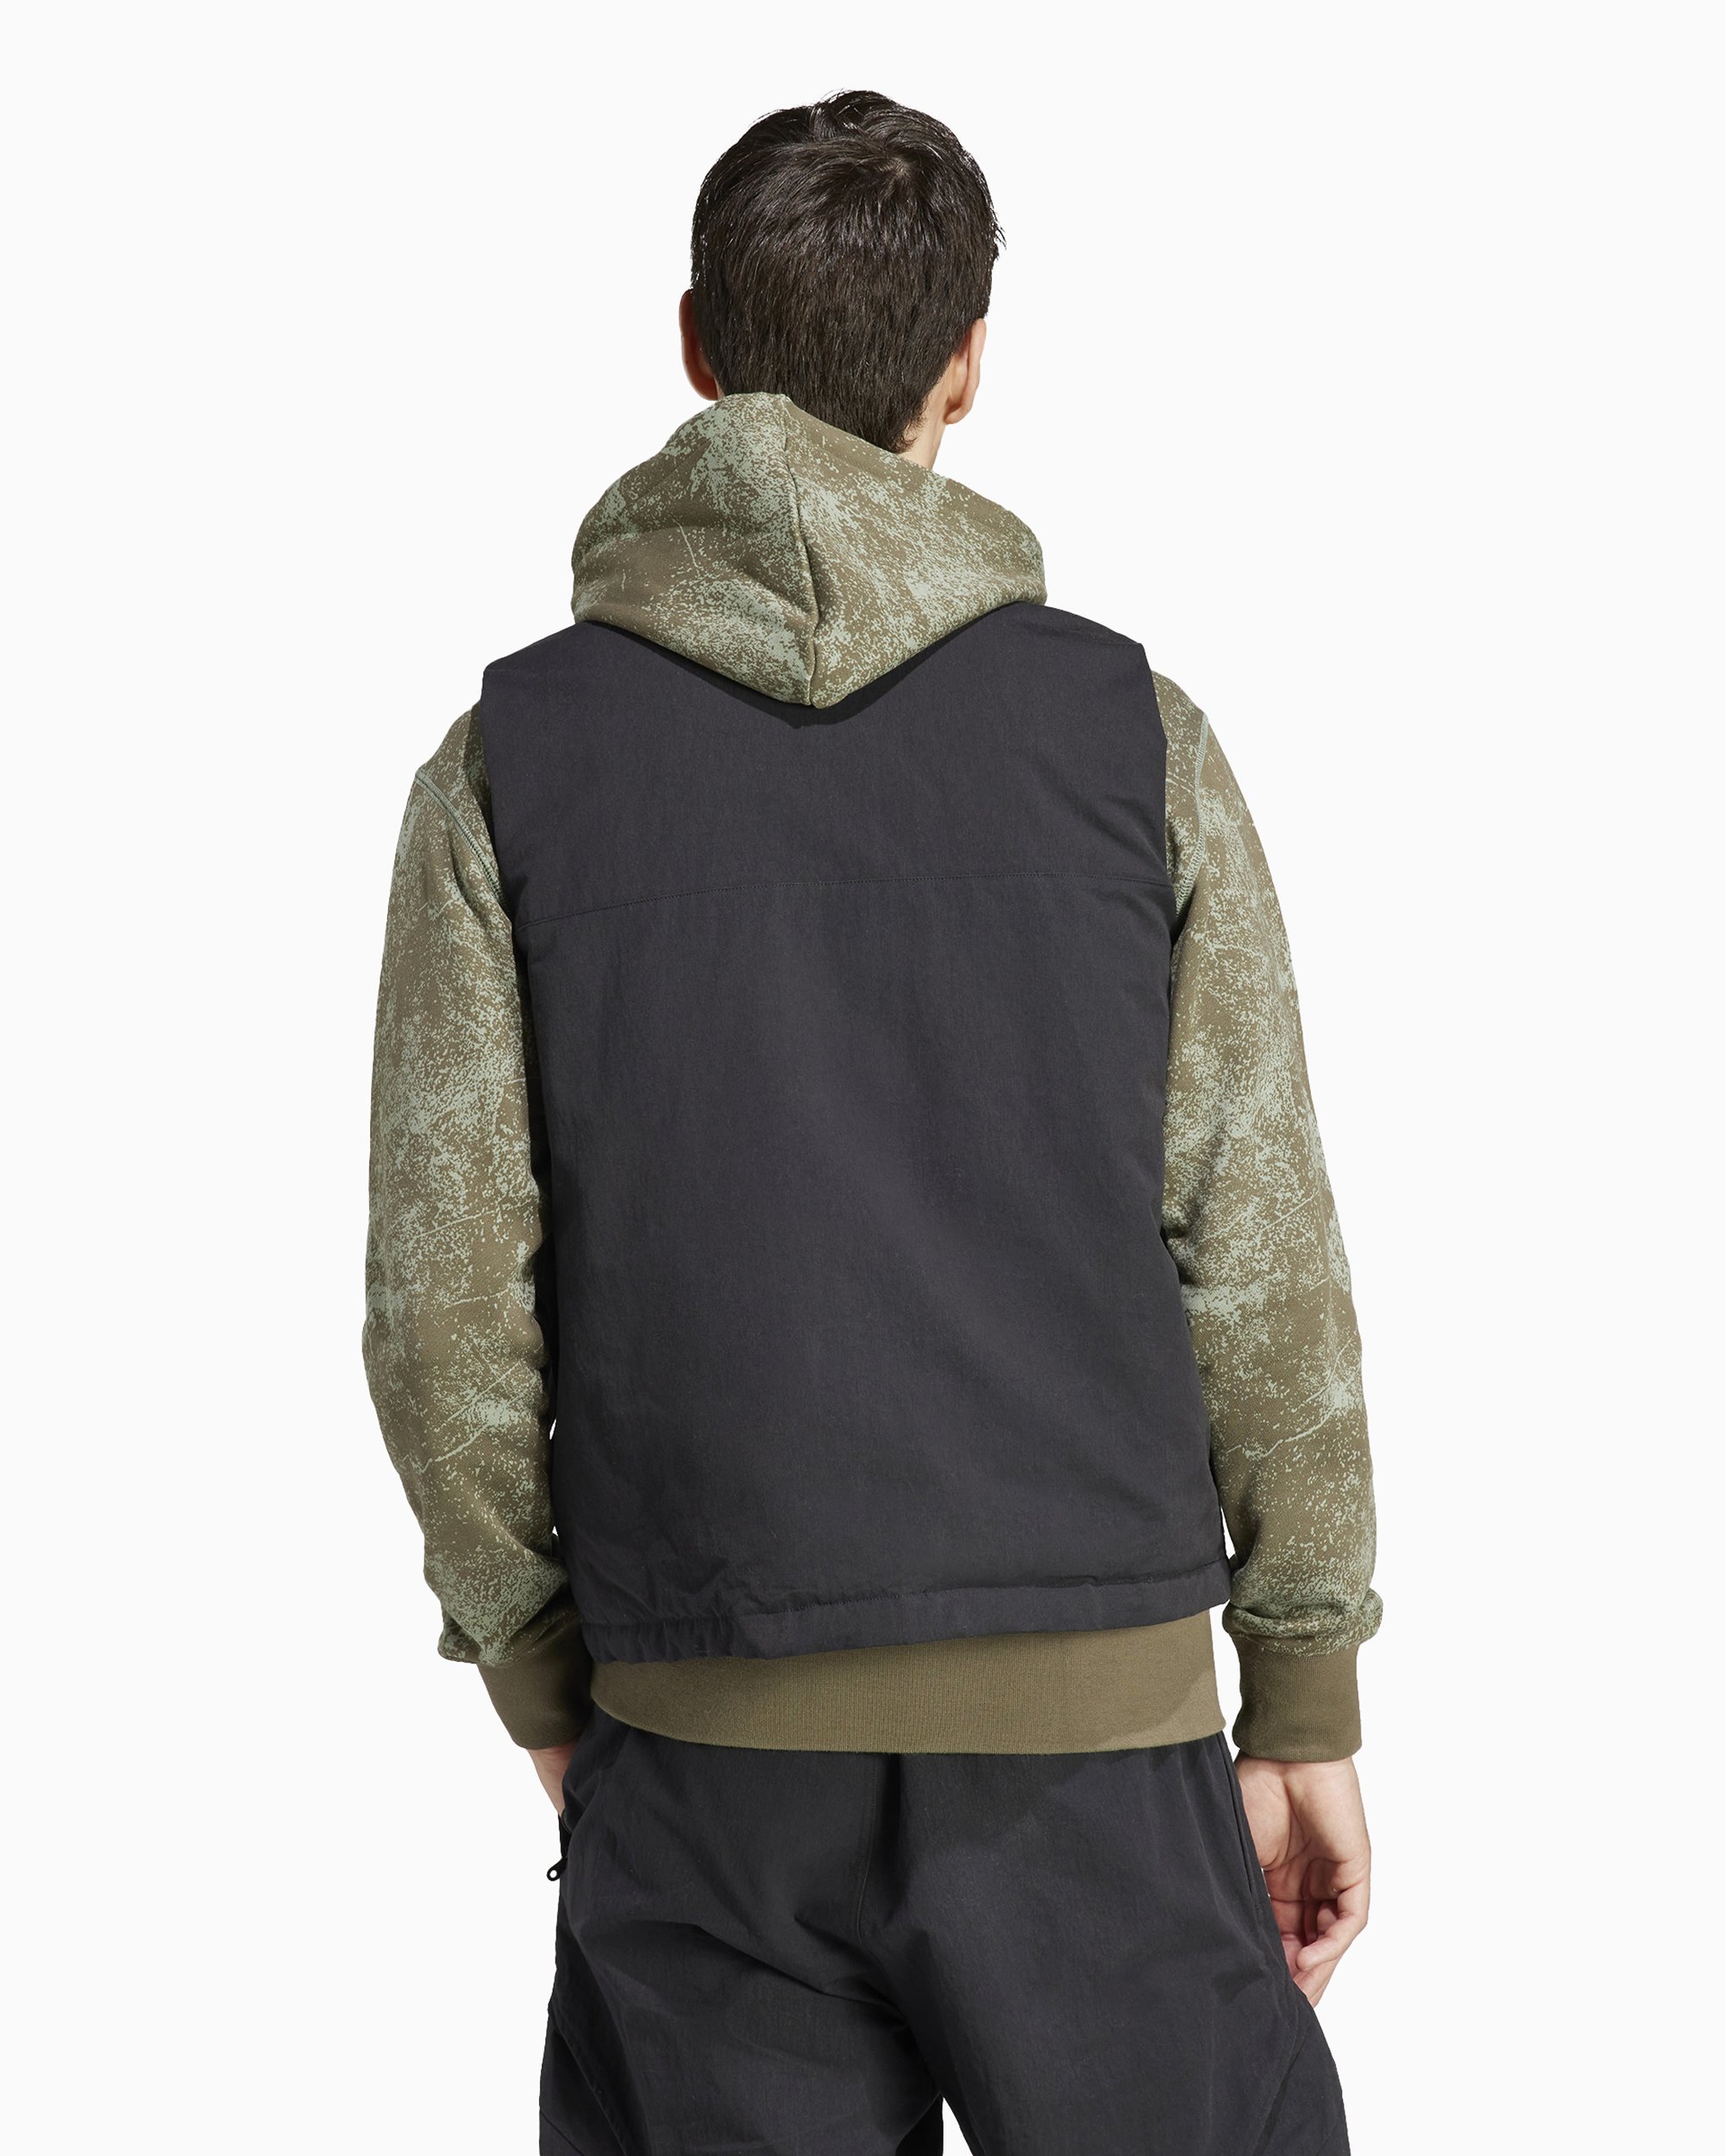 at Originals Adventure Black Premium IJ0721| Buy adidas Online Multi-Pocket Vest FOOTDISTRICT Men\'s